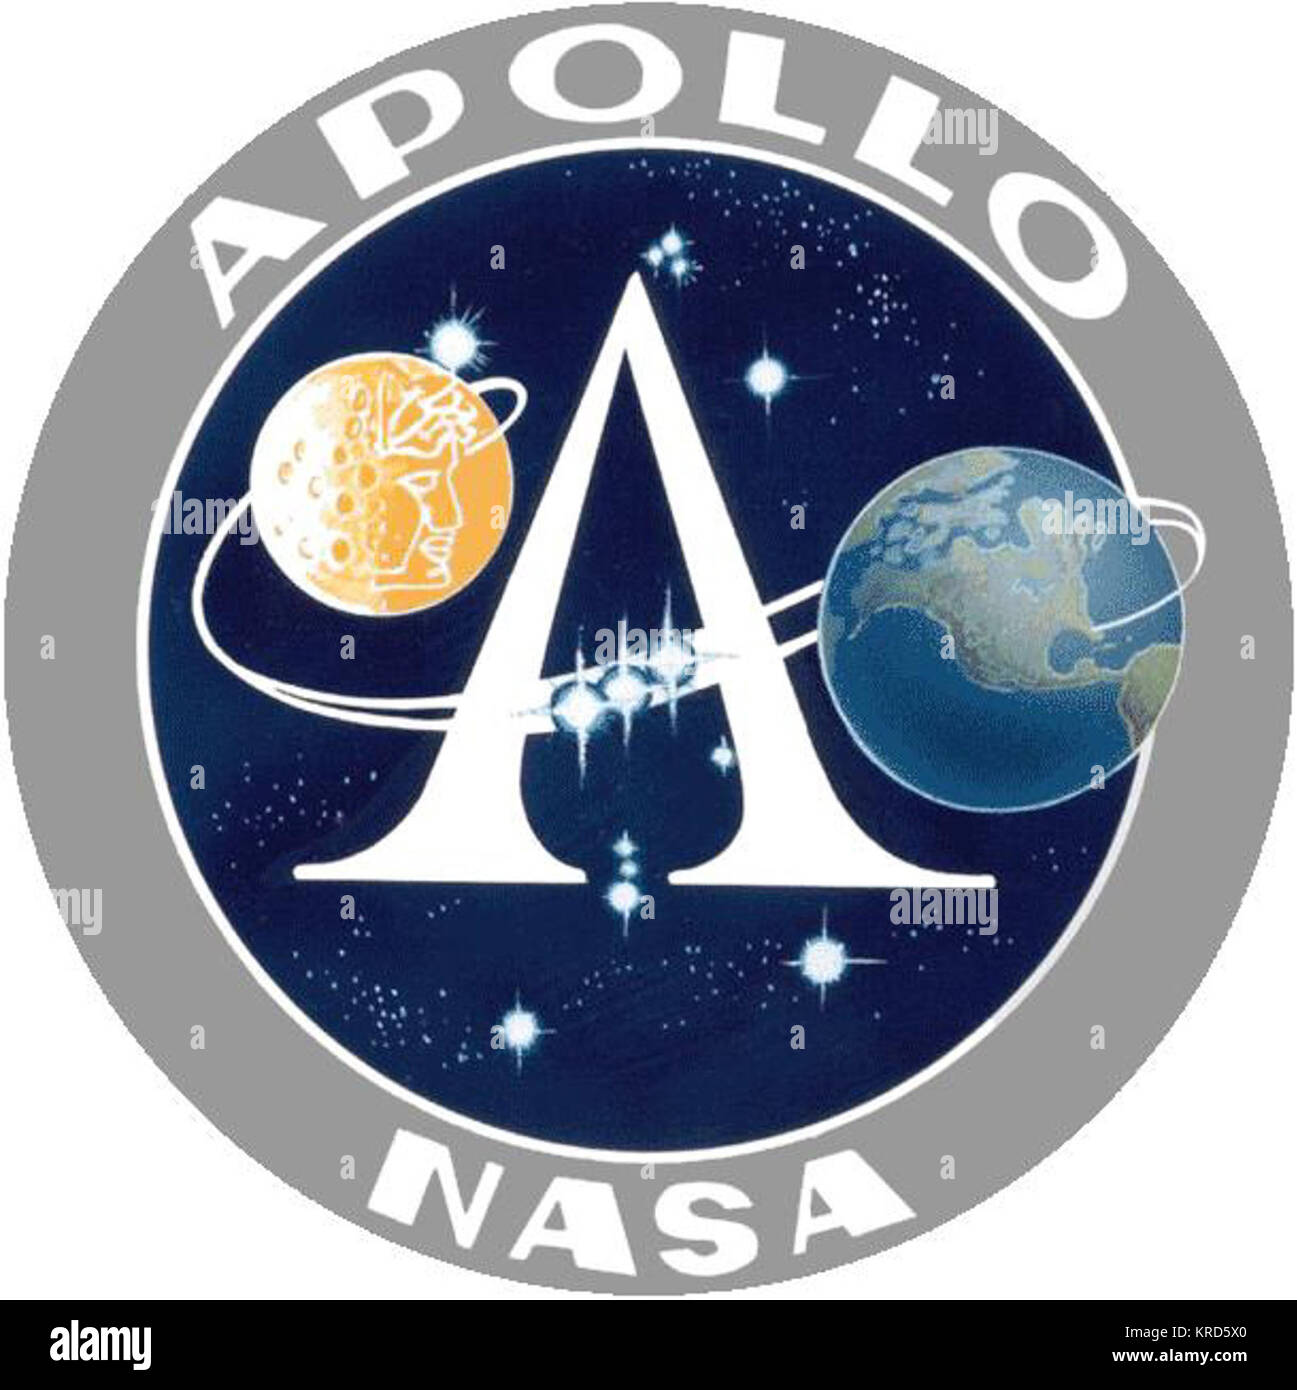 Apollo Programm insignia Stockfoto